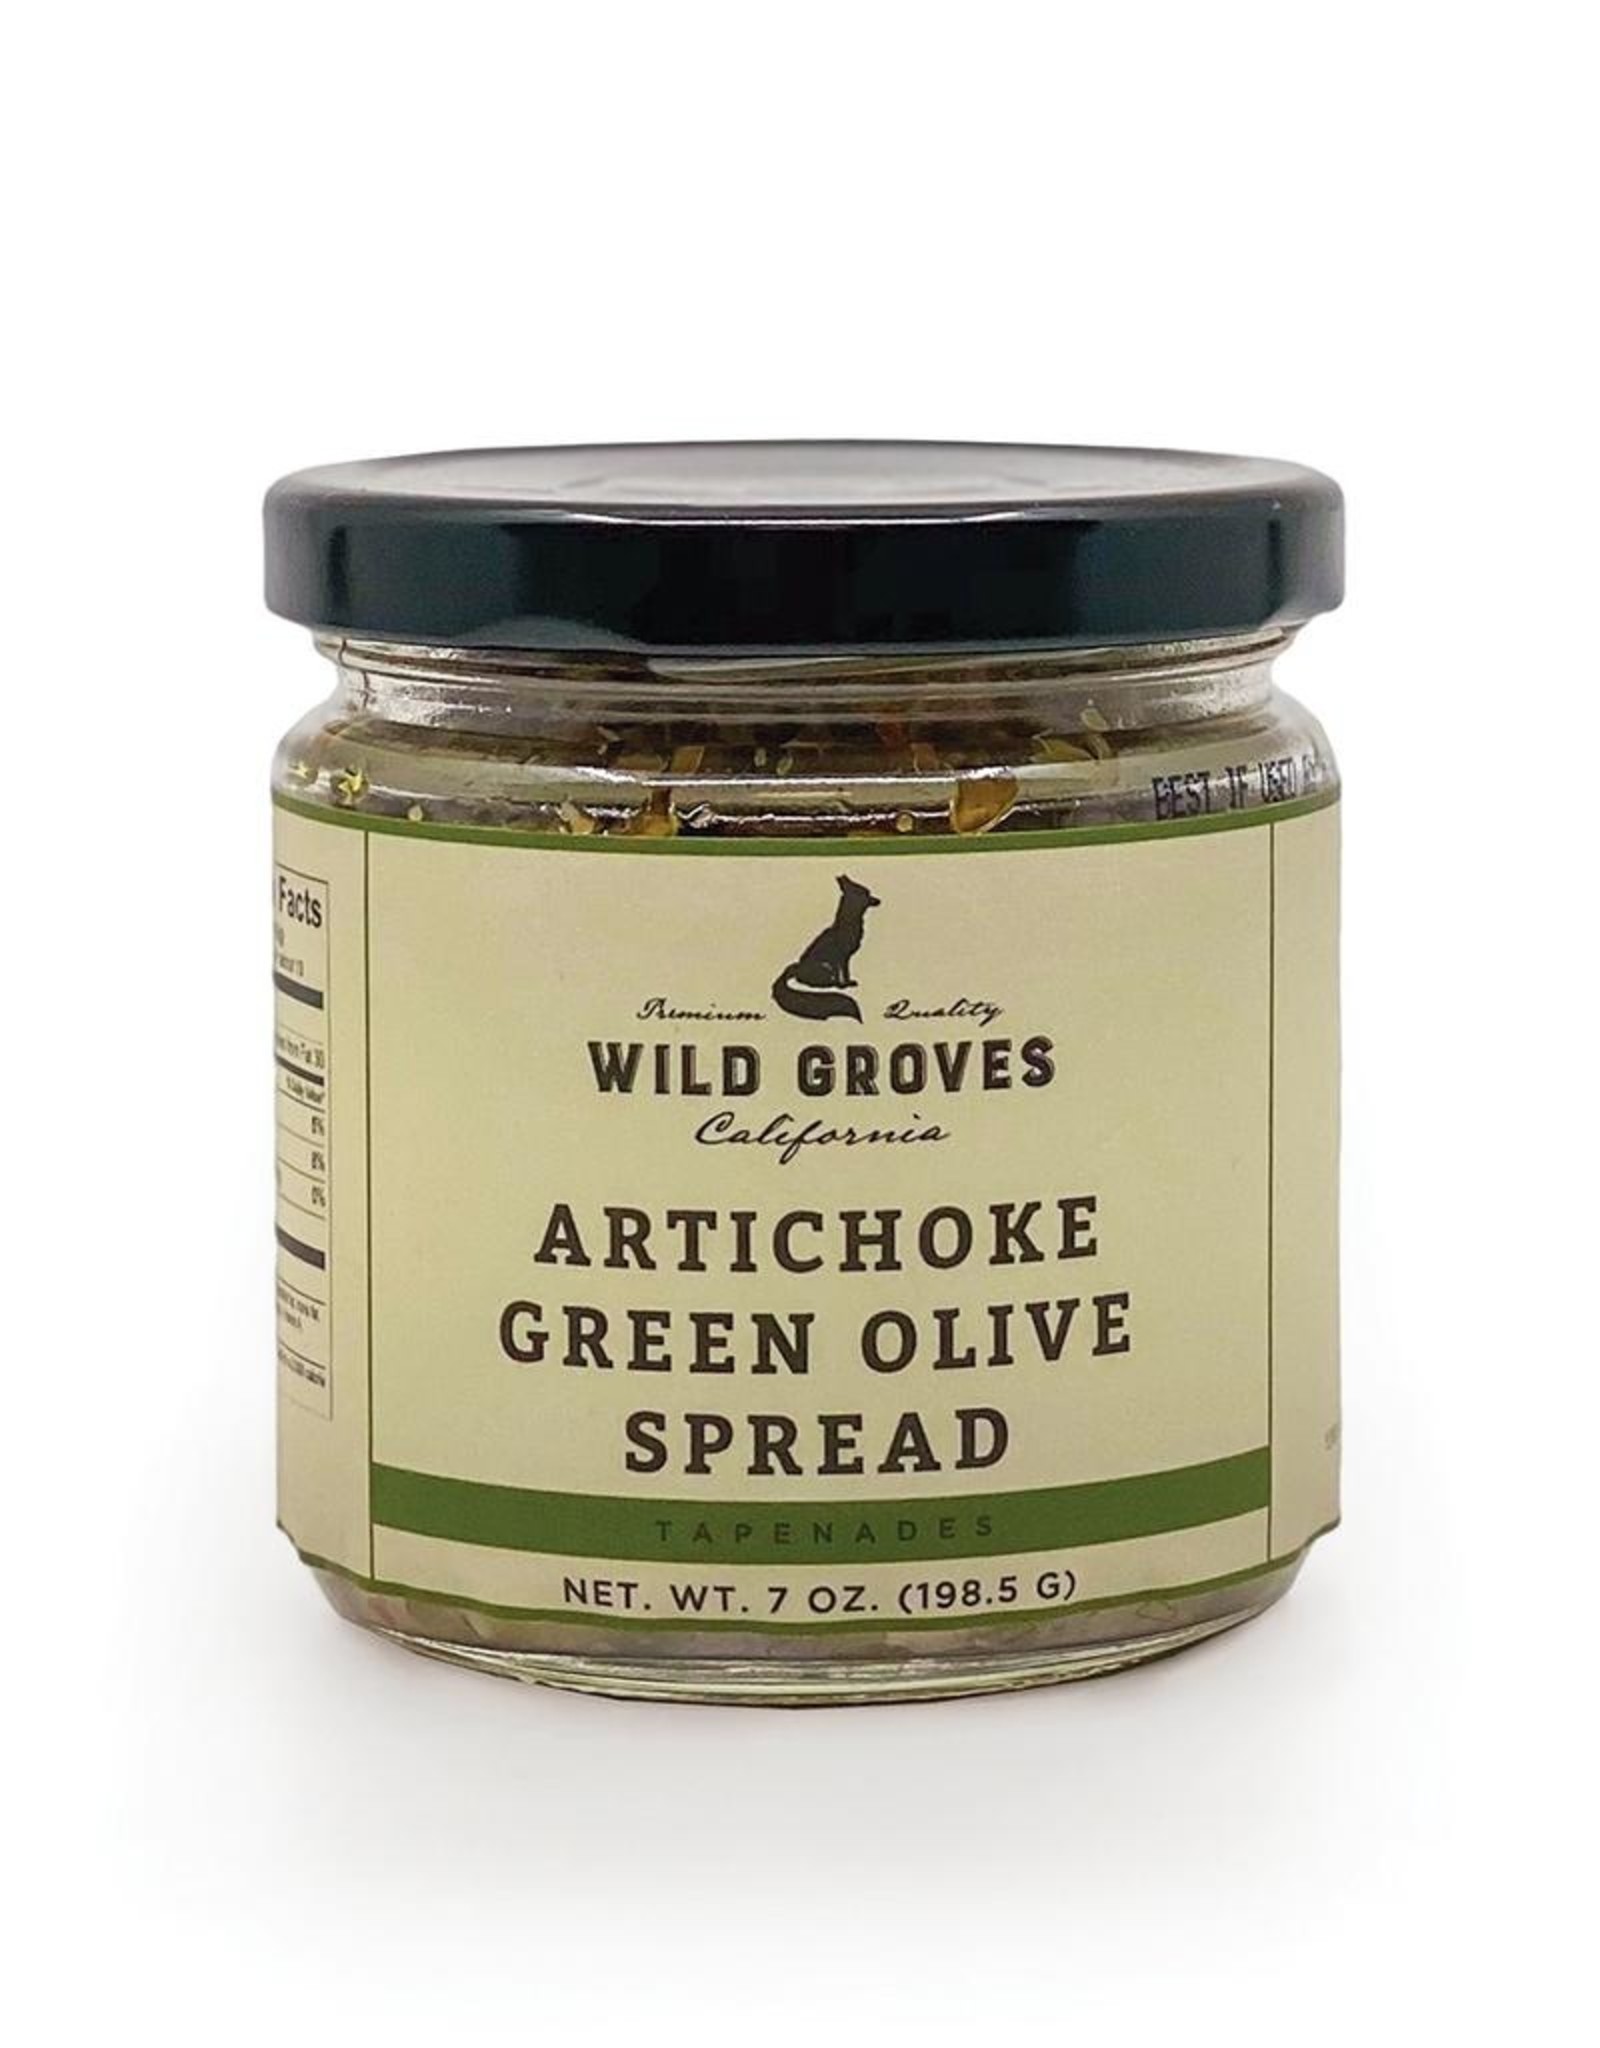 Wild Groves Wild Groves Artichoke Green Olive Spread 7 OZ 198.5 G